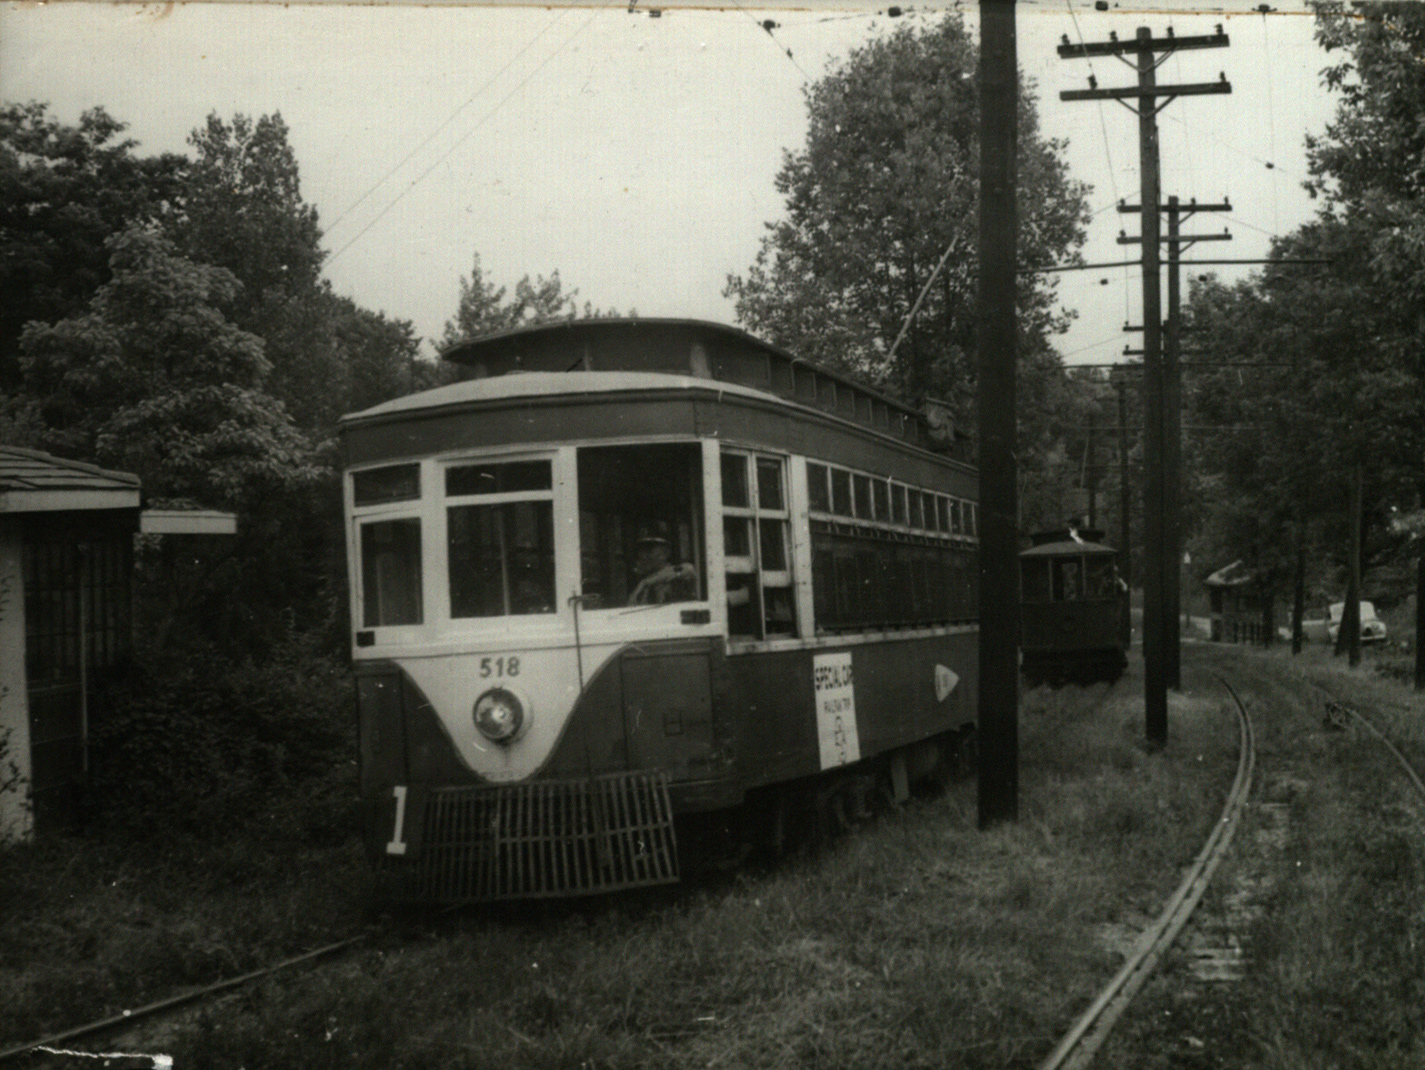 Covington, Cincinnati 4-axle motor car № 518; Covington — Special Railfans Trip on July 18, 1950